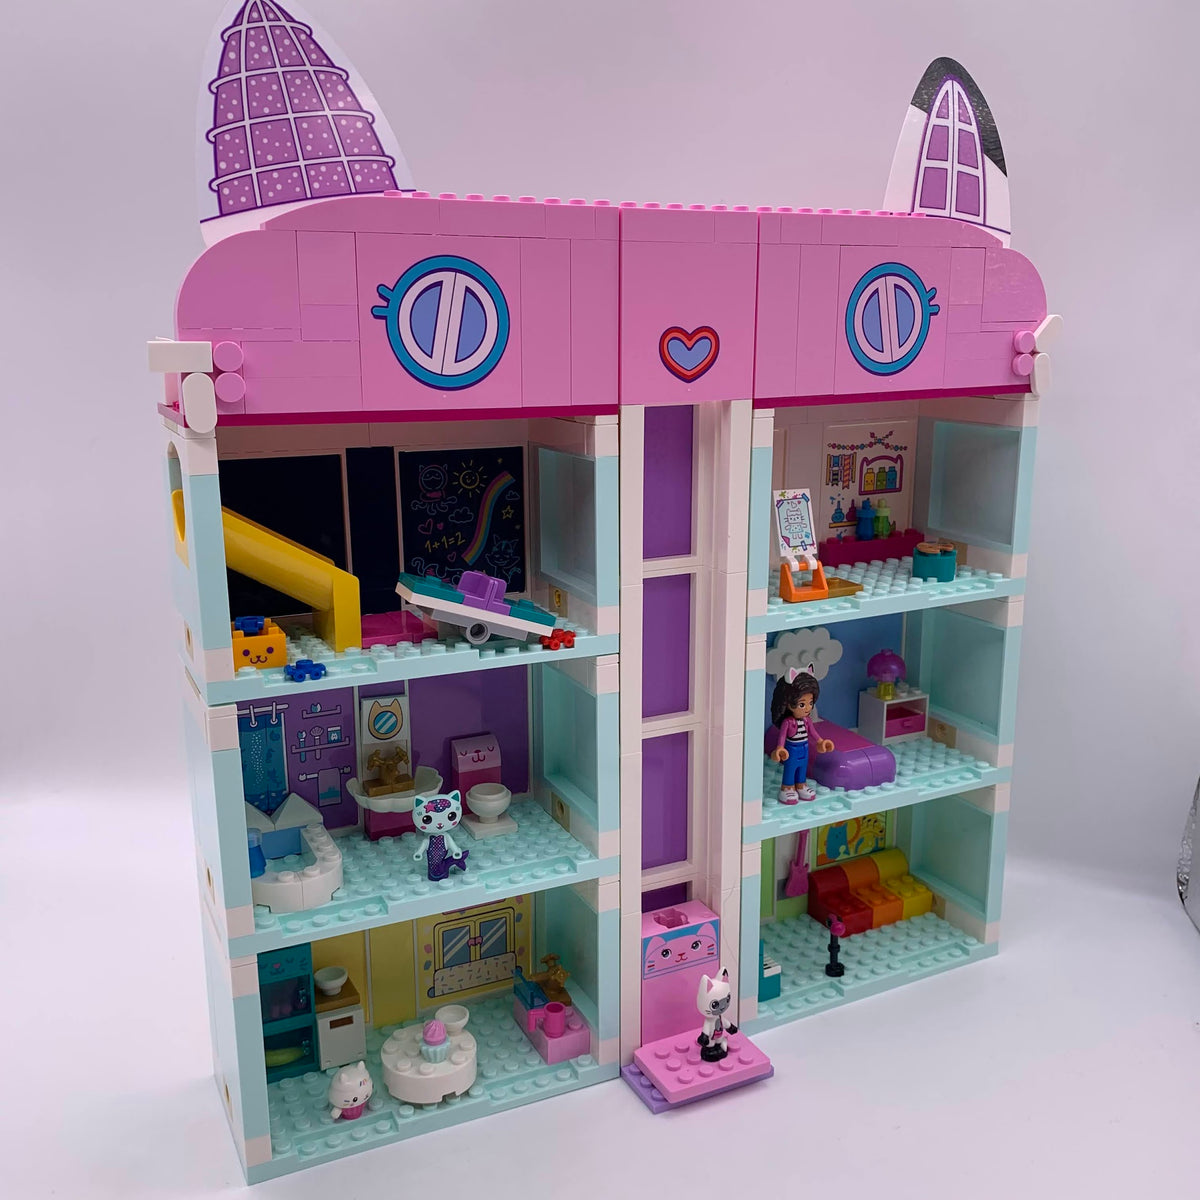 LEGO 10788 Gabby's Dollhouse Speed Build Review 